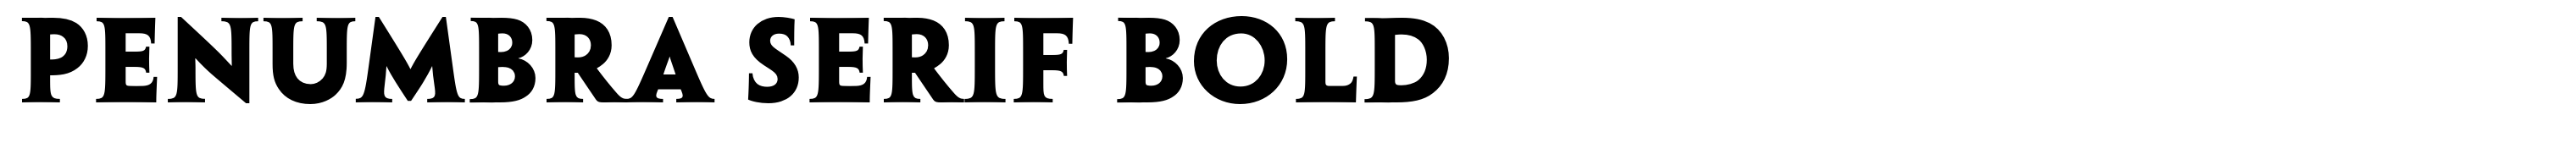 Penumbra Serif Bold